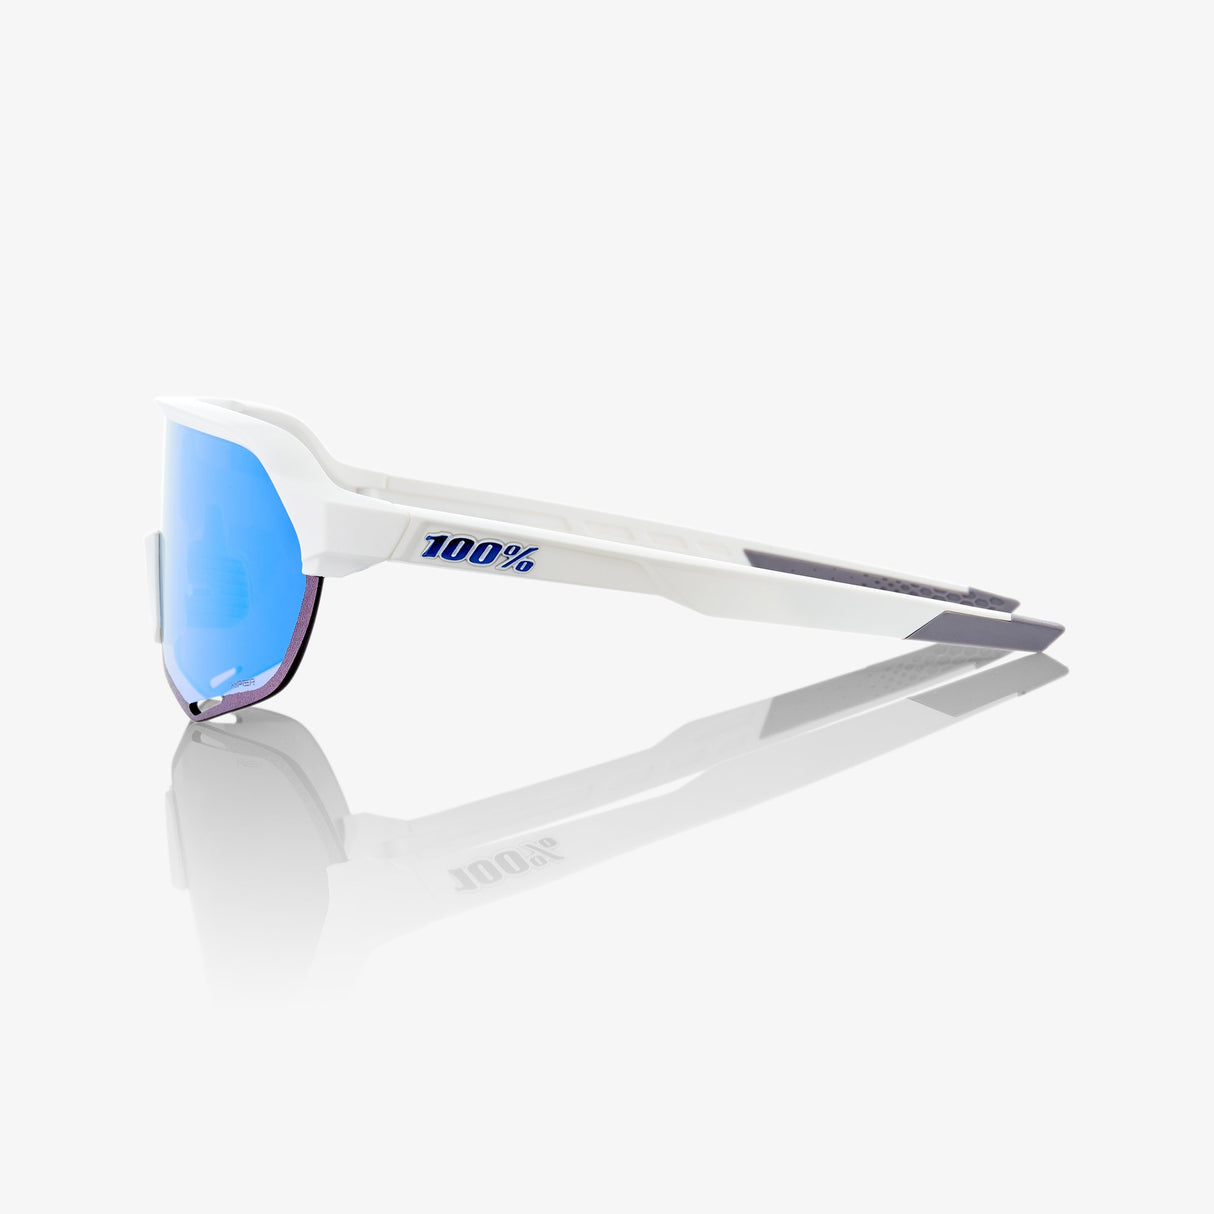 100% Percent Sunglasses- S2 - Matte White - HiPER Blue Multilayer Mirror Lens